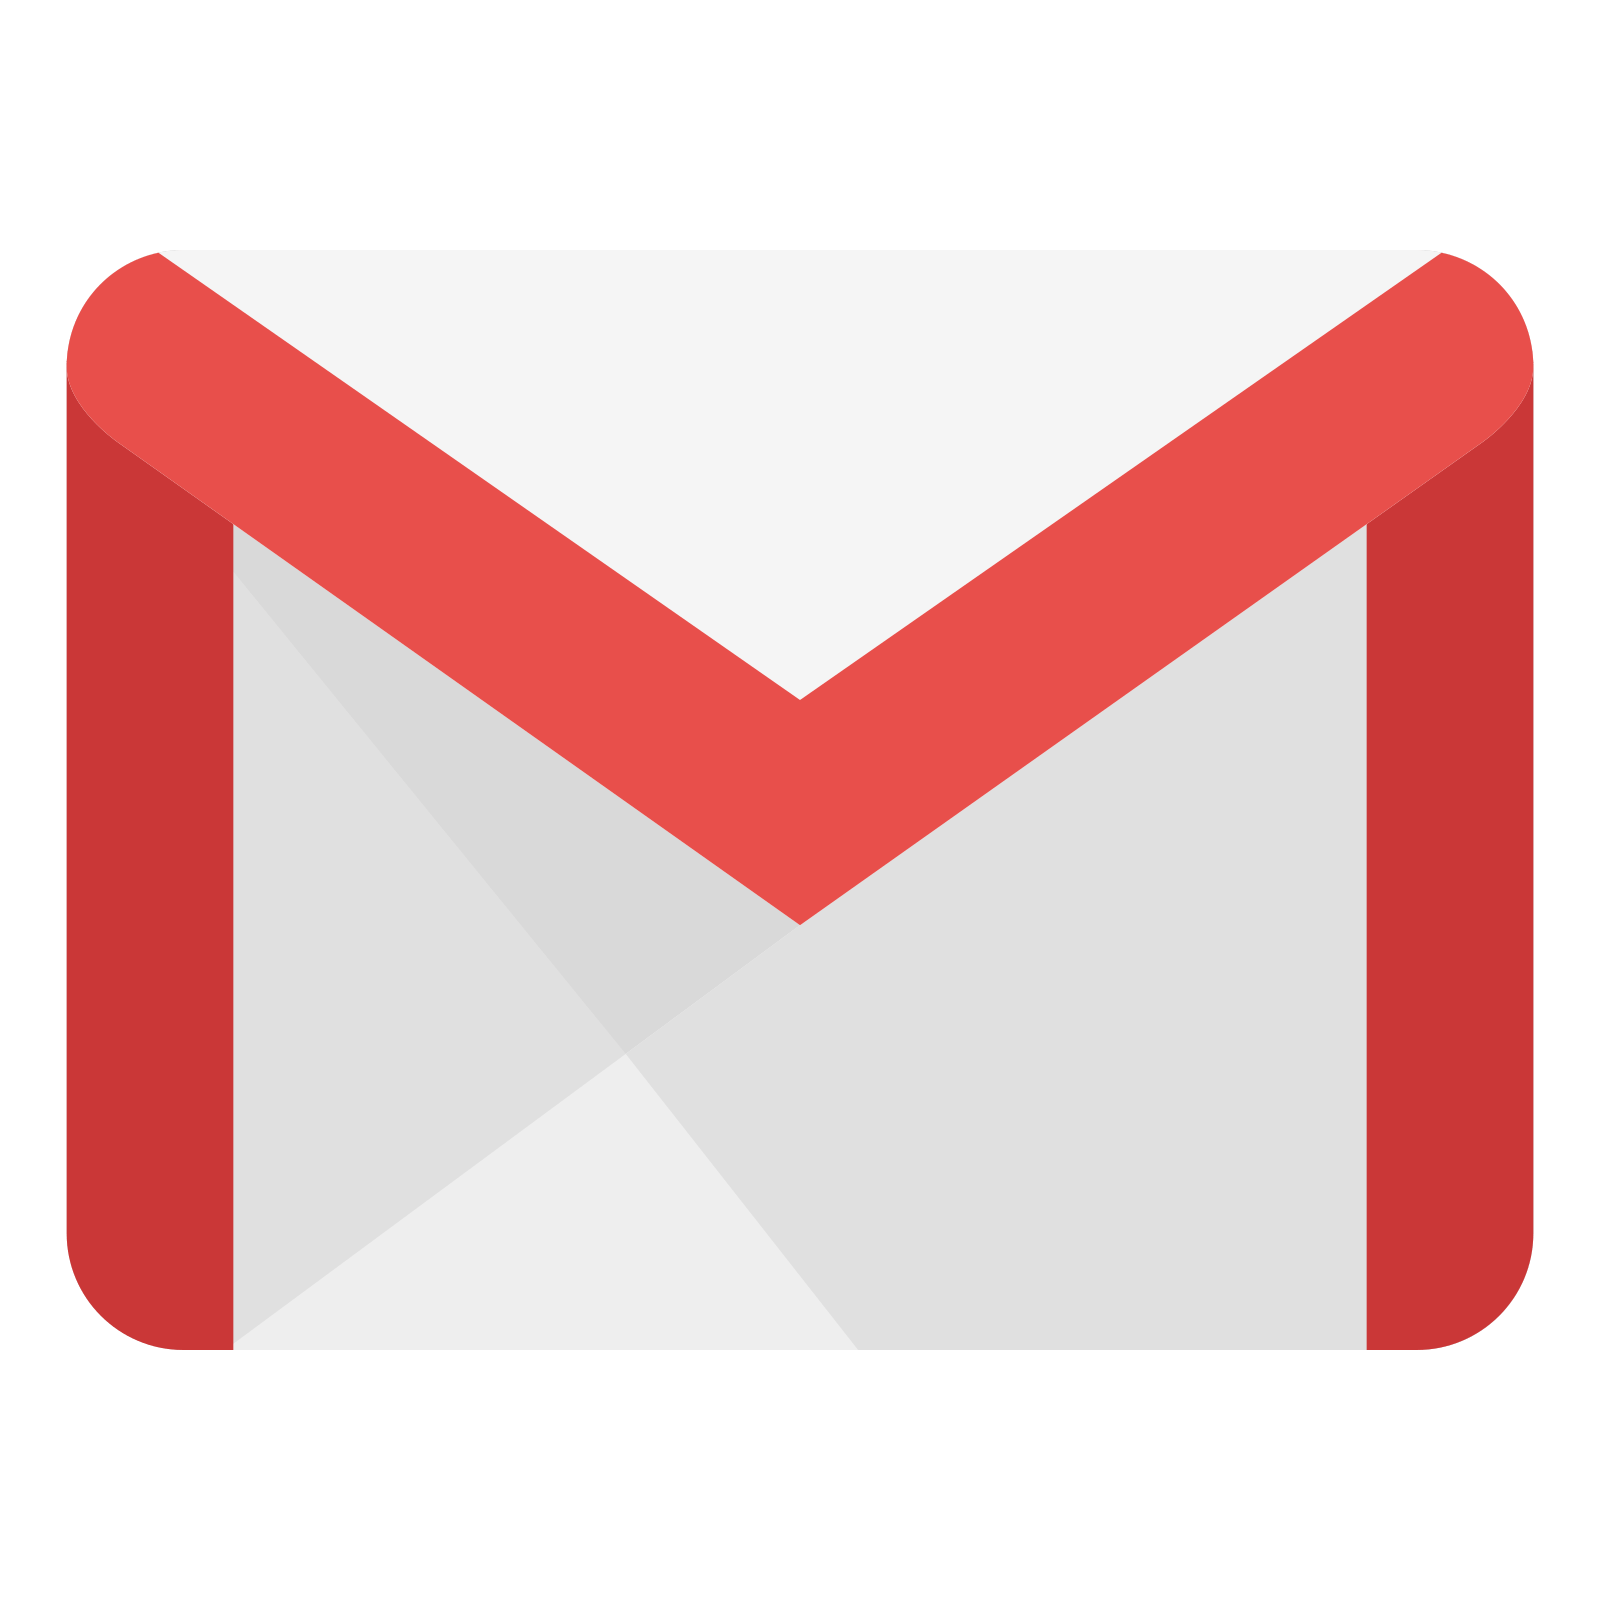 Gmail net. Значок гмаил. Значок гугл почты. Gmail логотип PNG.